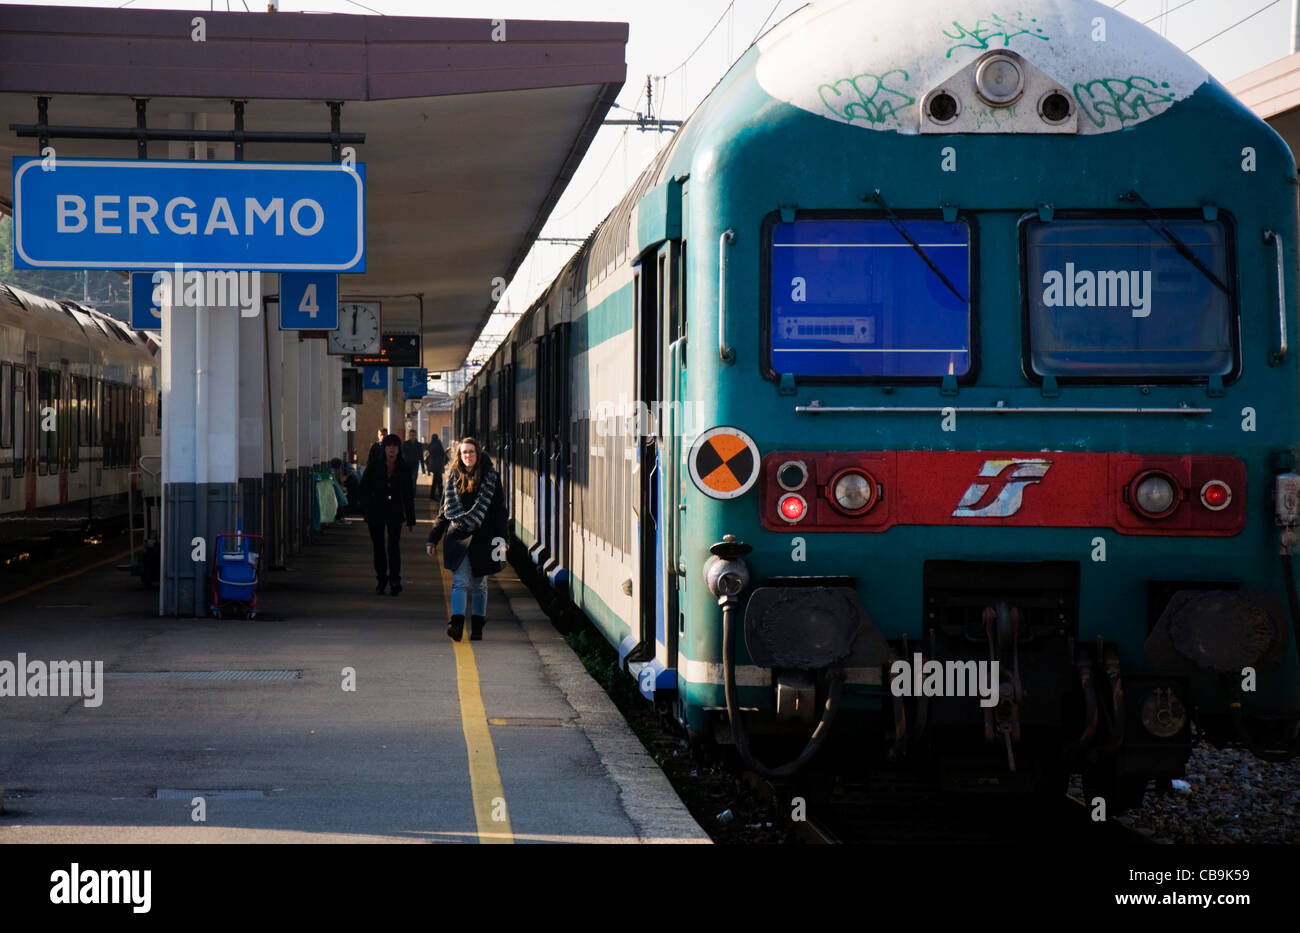 Bergamo Railway Station platform 4 Stock Photo